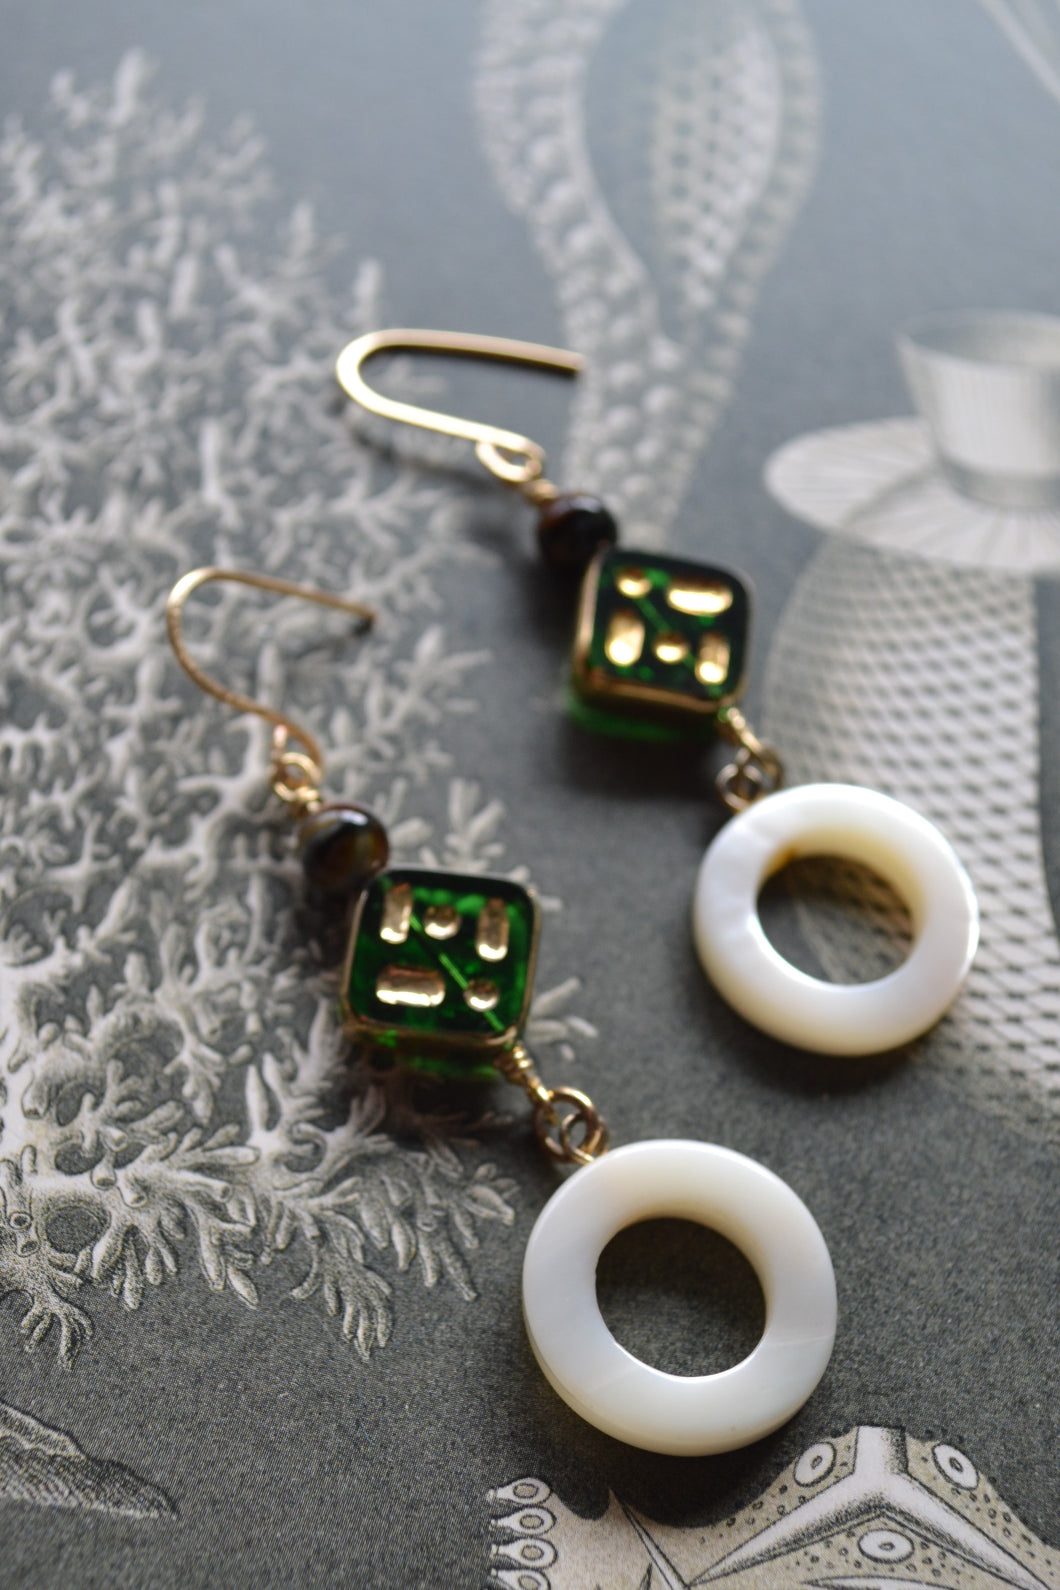 Ring of Pearl & Green Glass Earrings